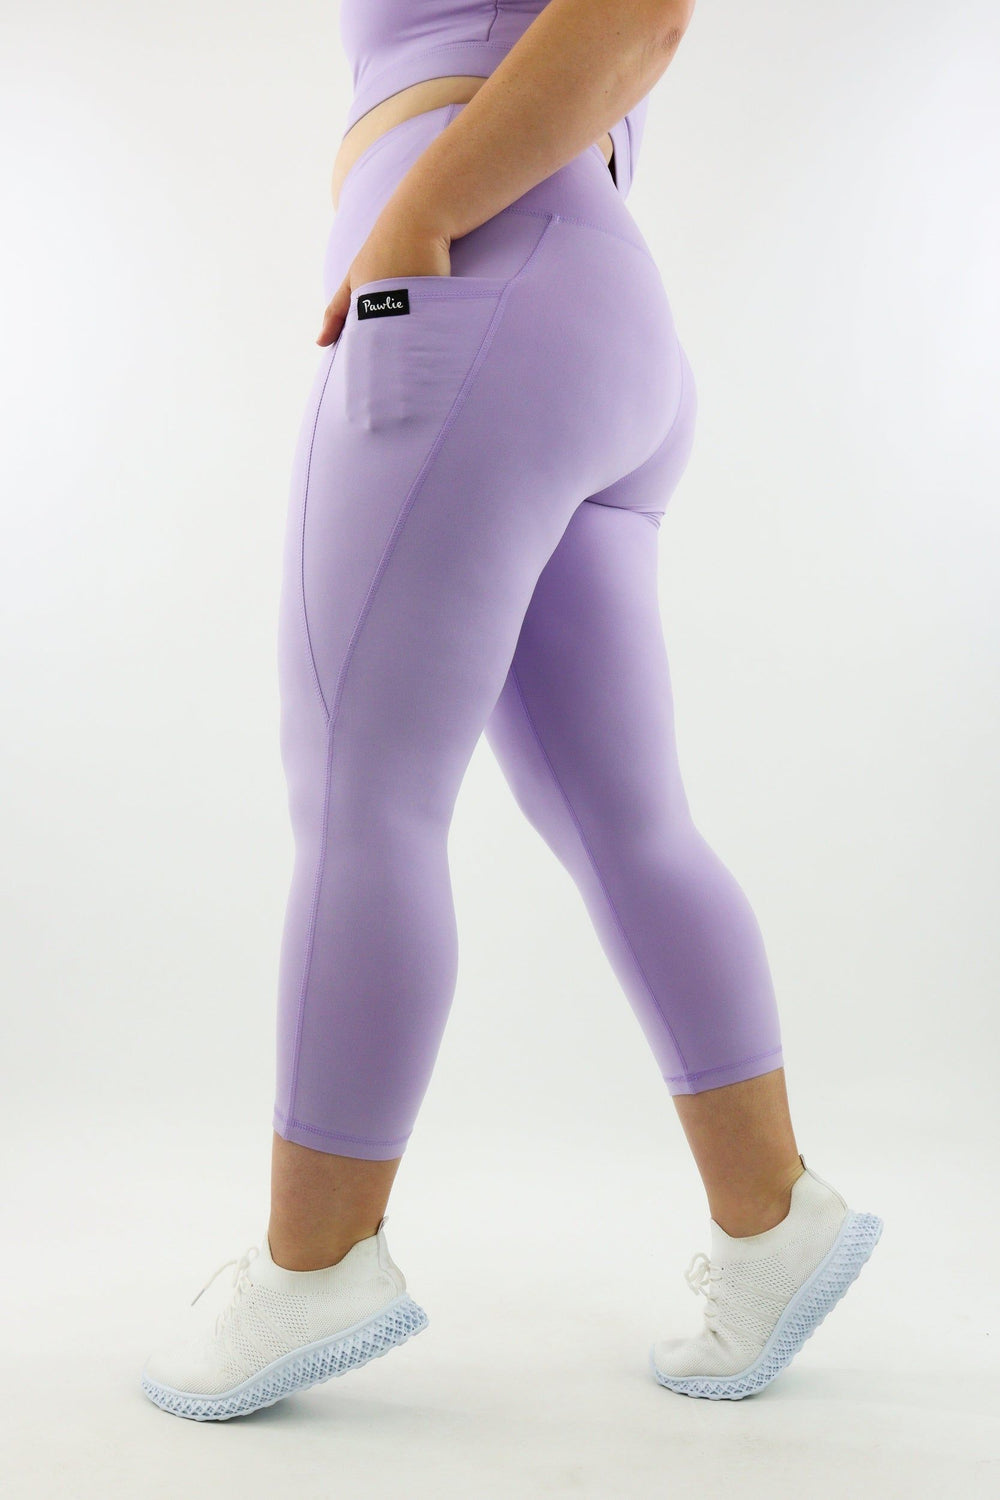 Light Purple - Leg Pockets - Capri Leggings - Hybrid 2.0 - Pawlie